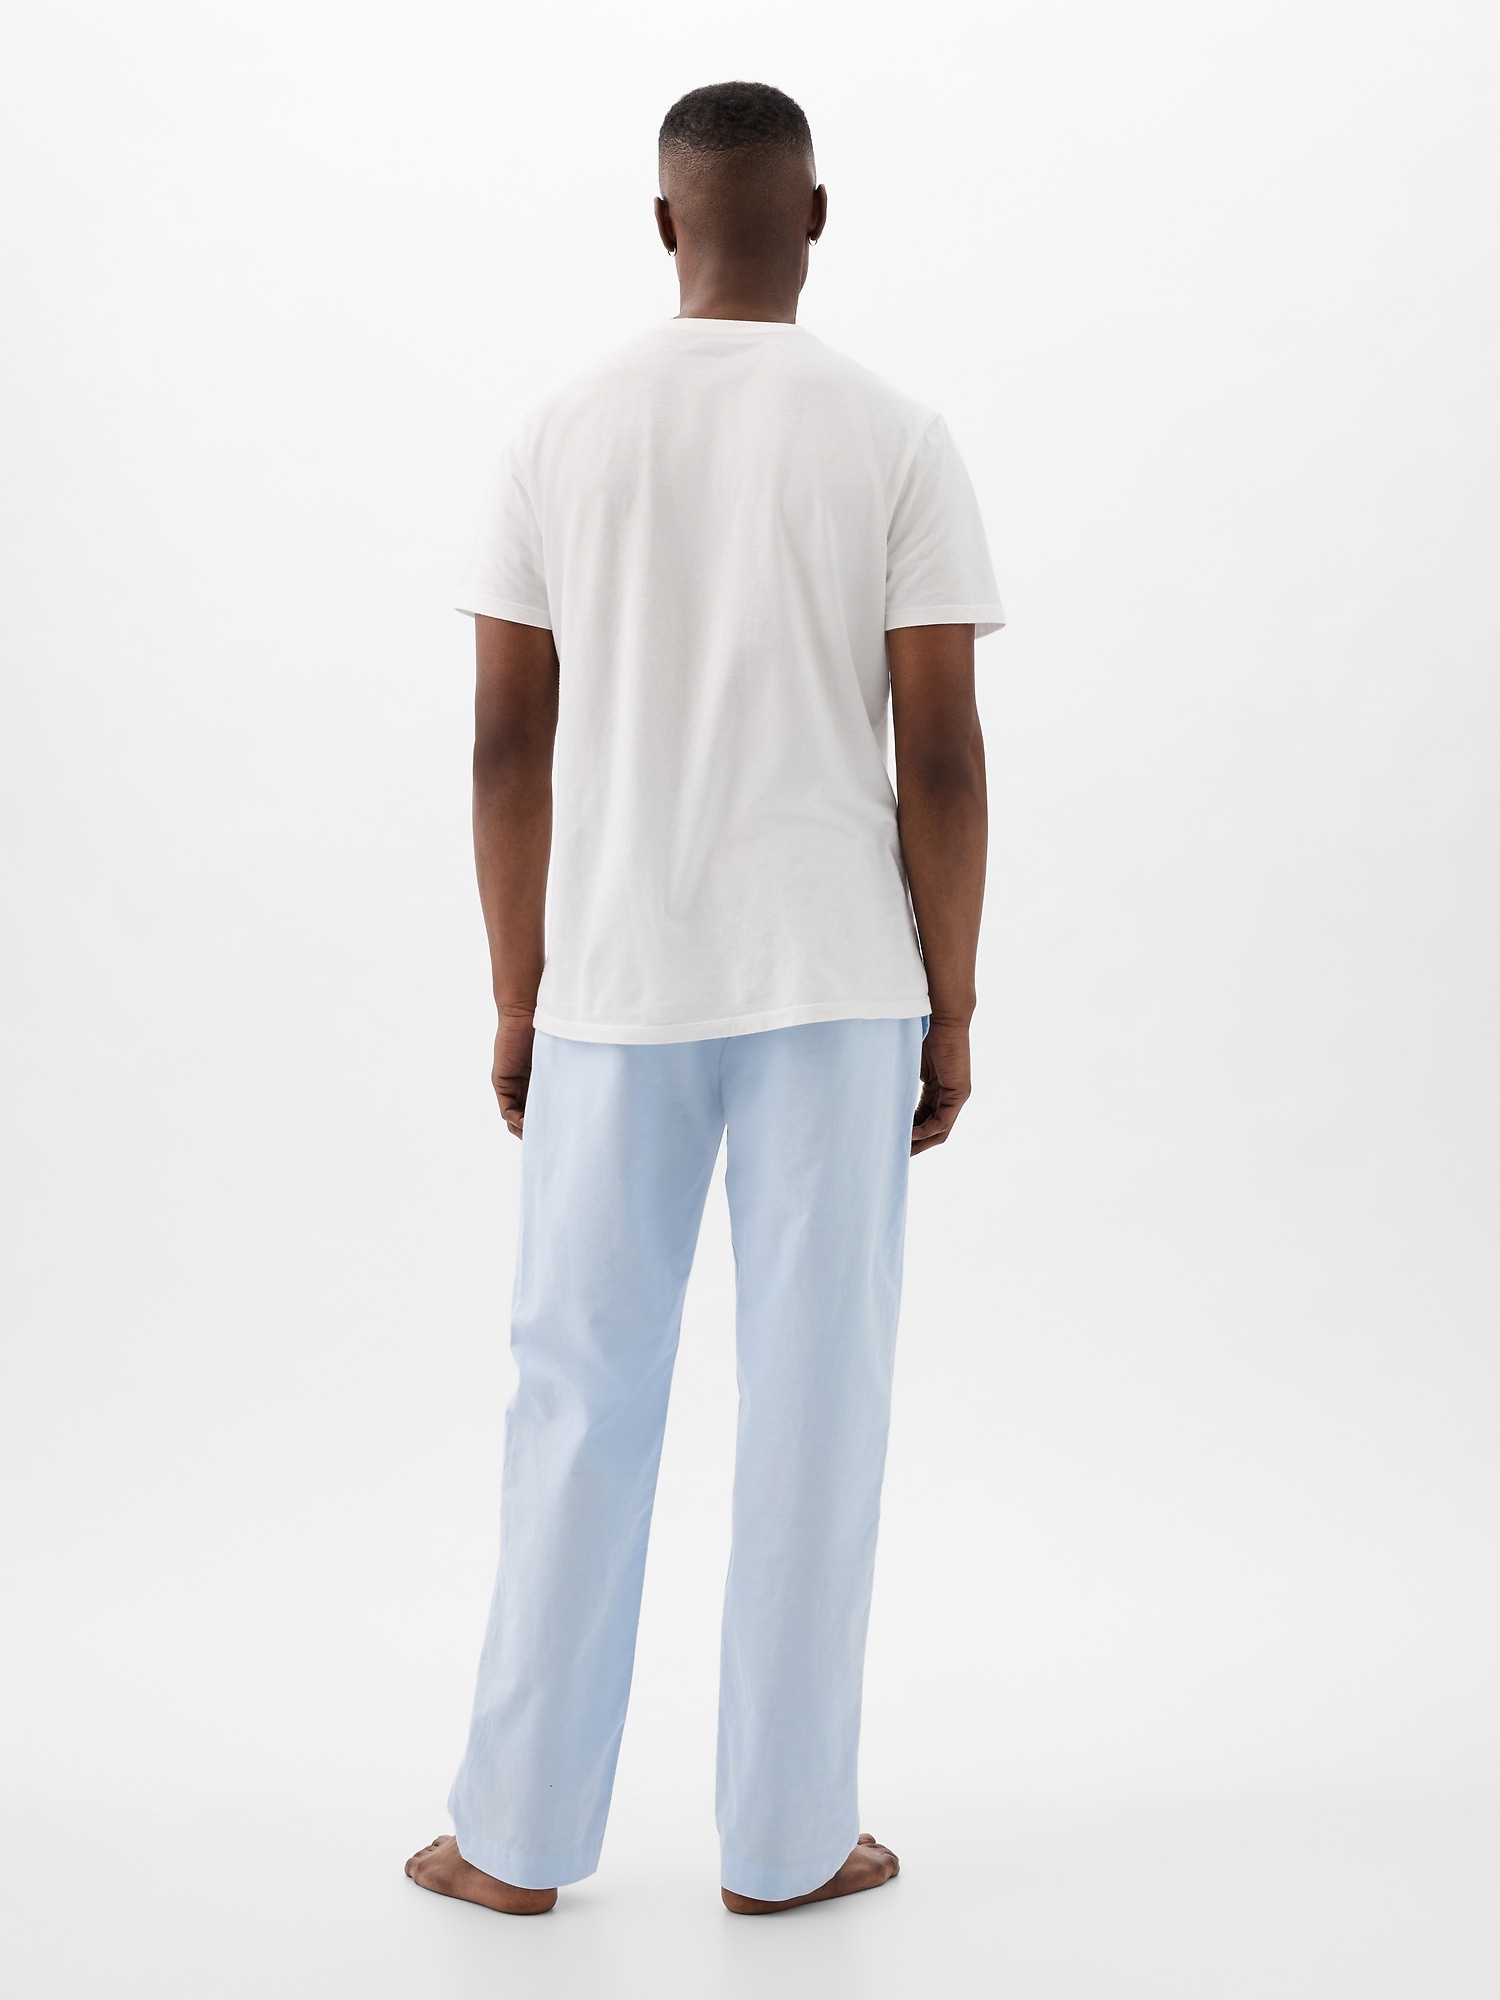 Gap Body Womens Blue White Plaid Pajama pants size medium